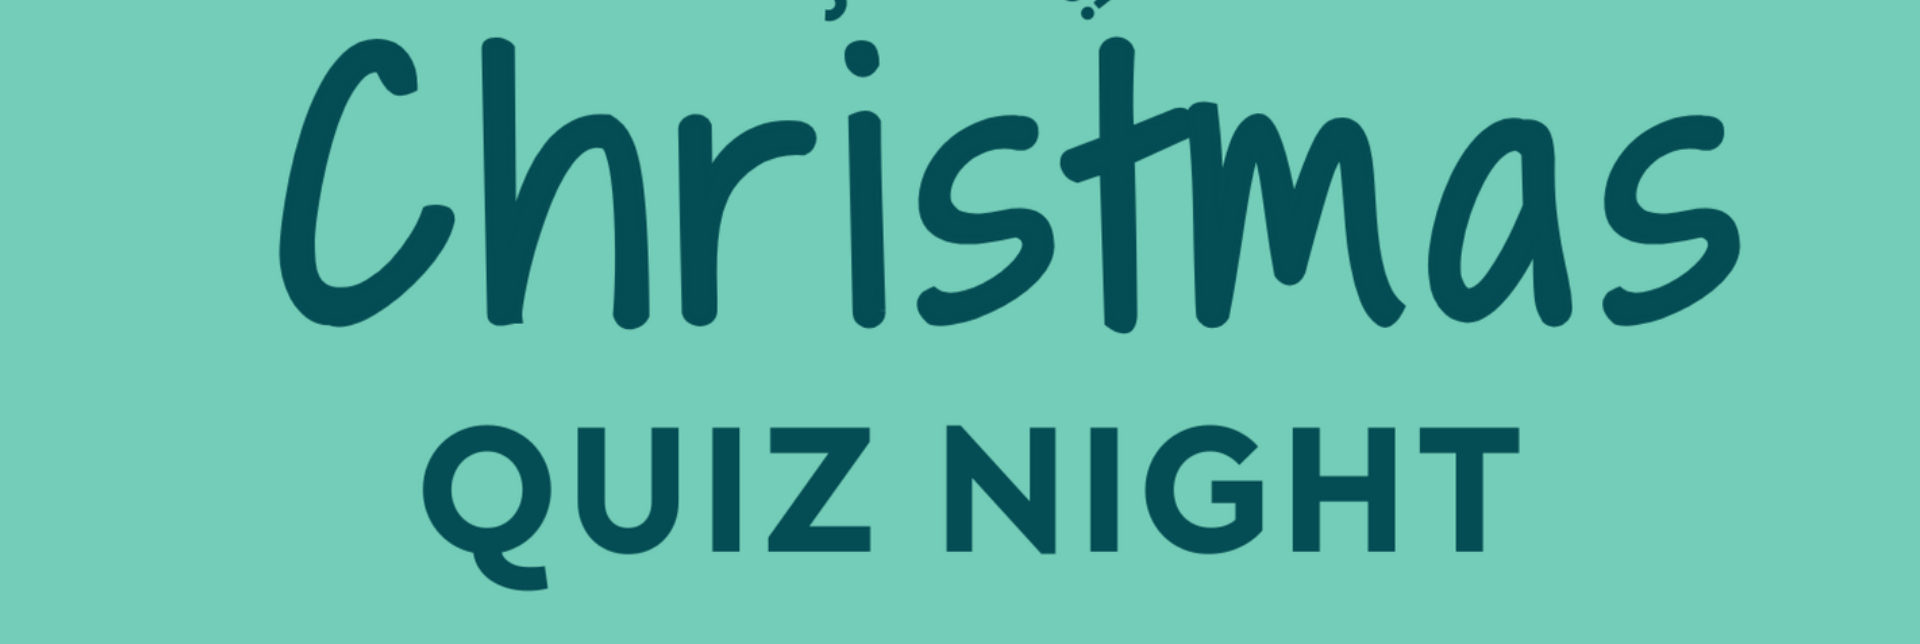 Friends of Pocklington Arts Centre: Christmas Quiz Night